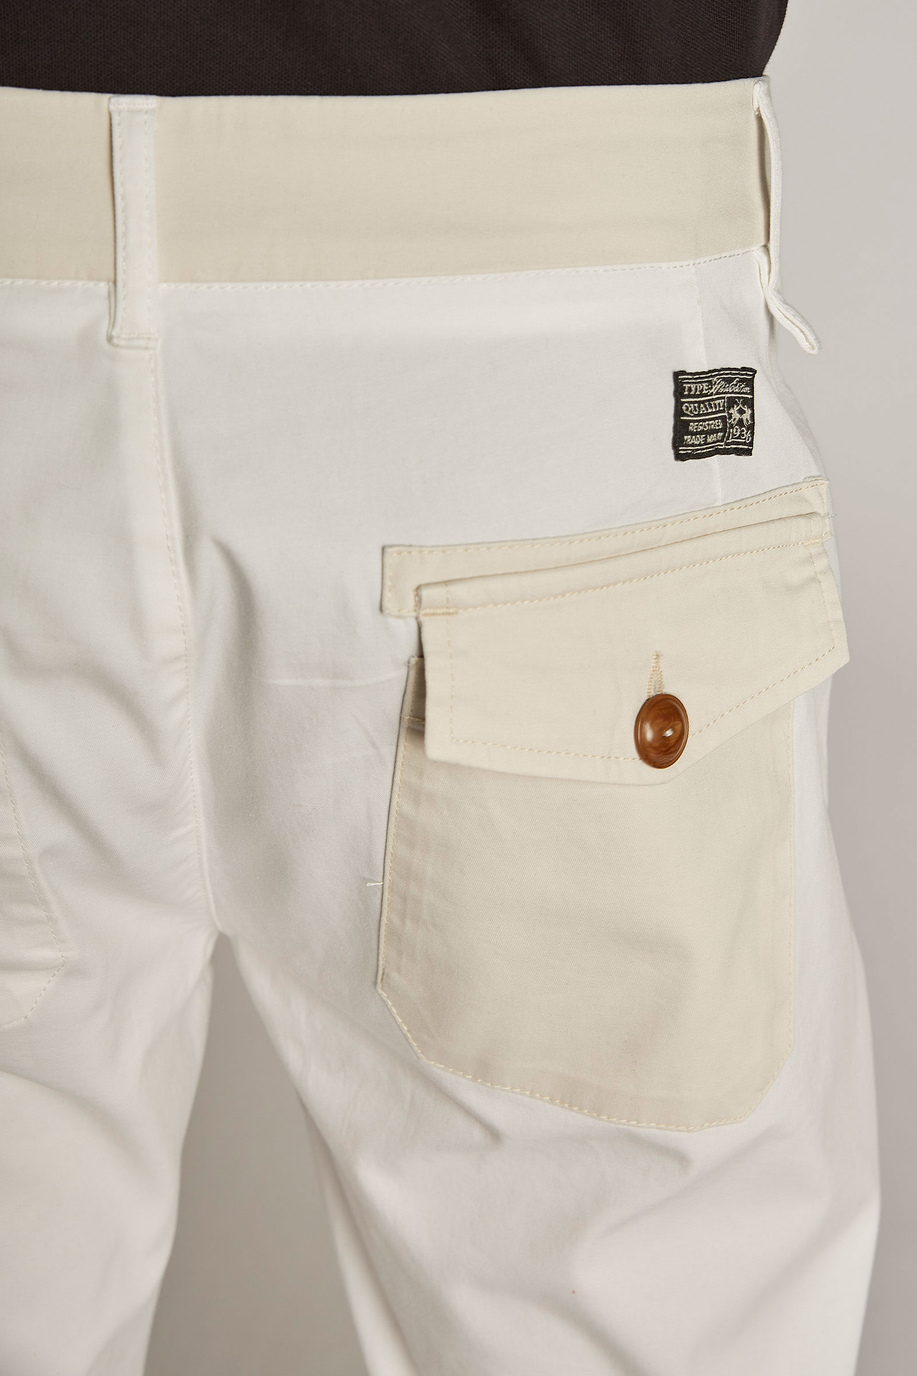 Pantalón de hombre de algodón mezcla de lino, corte regular